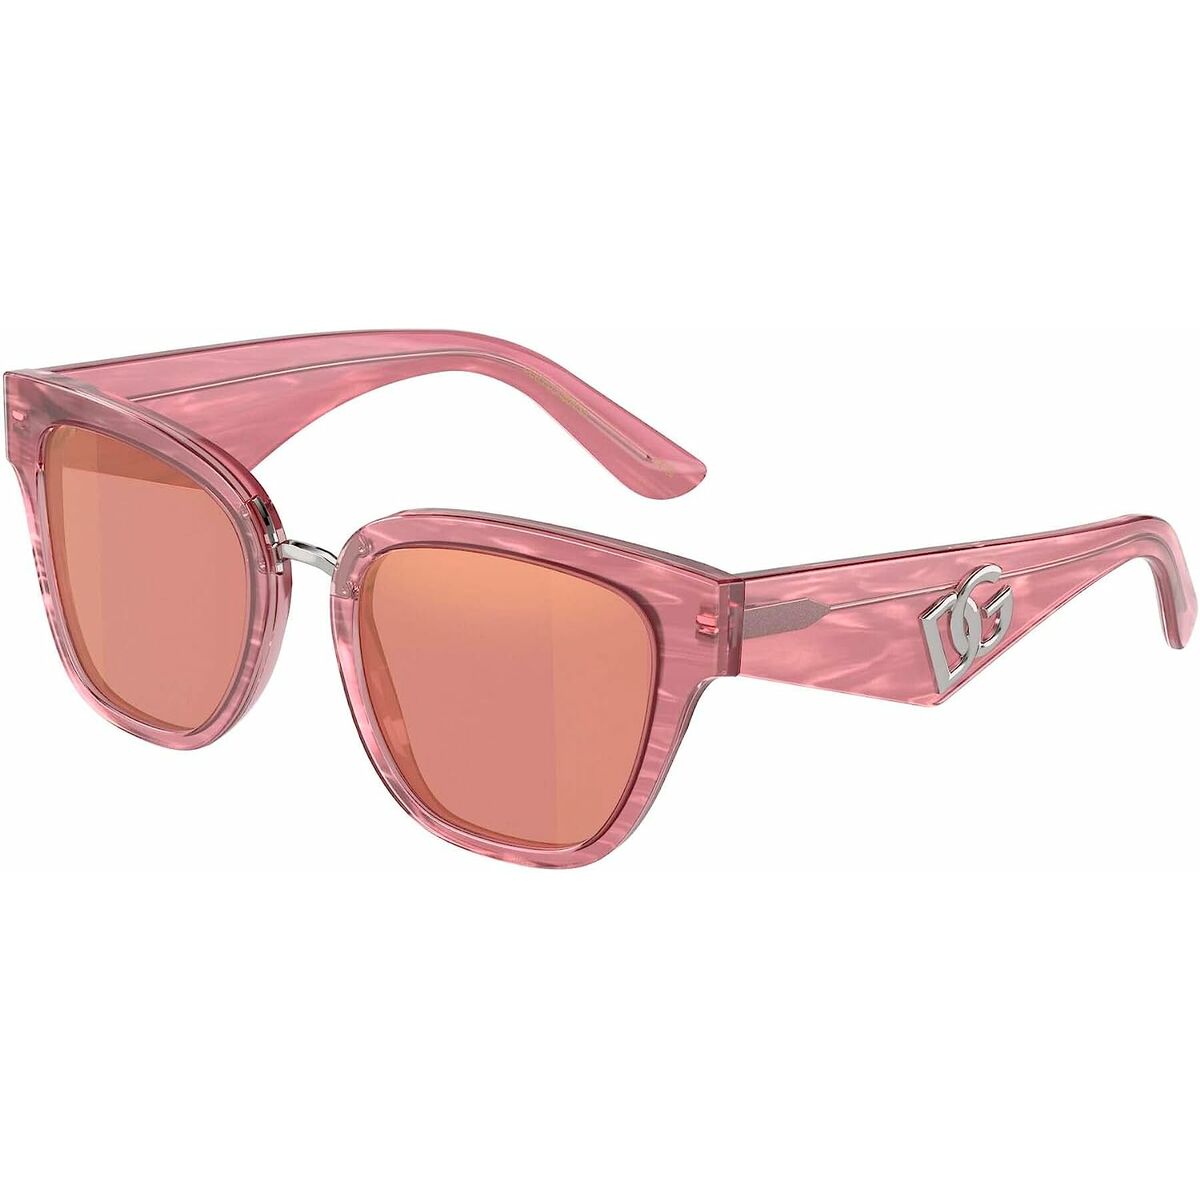 Ladies' Sunglasses Dolce & Gabbana DG 4437